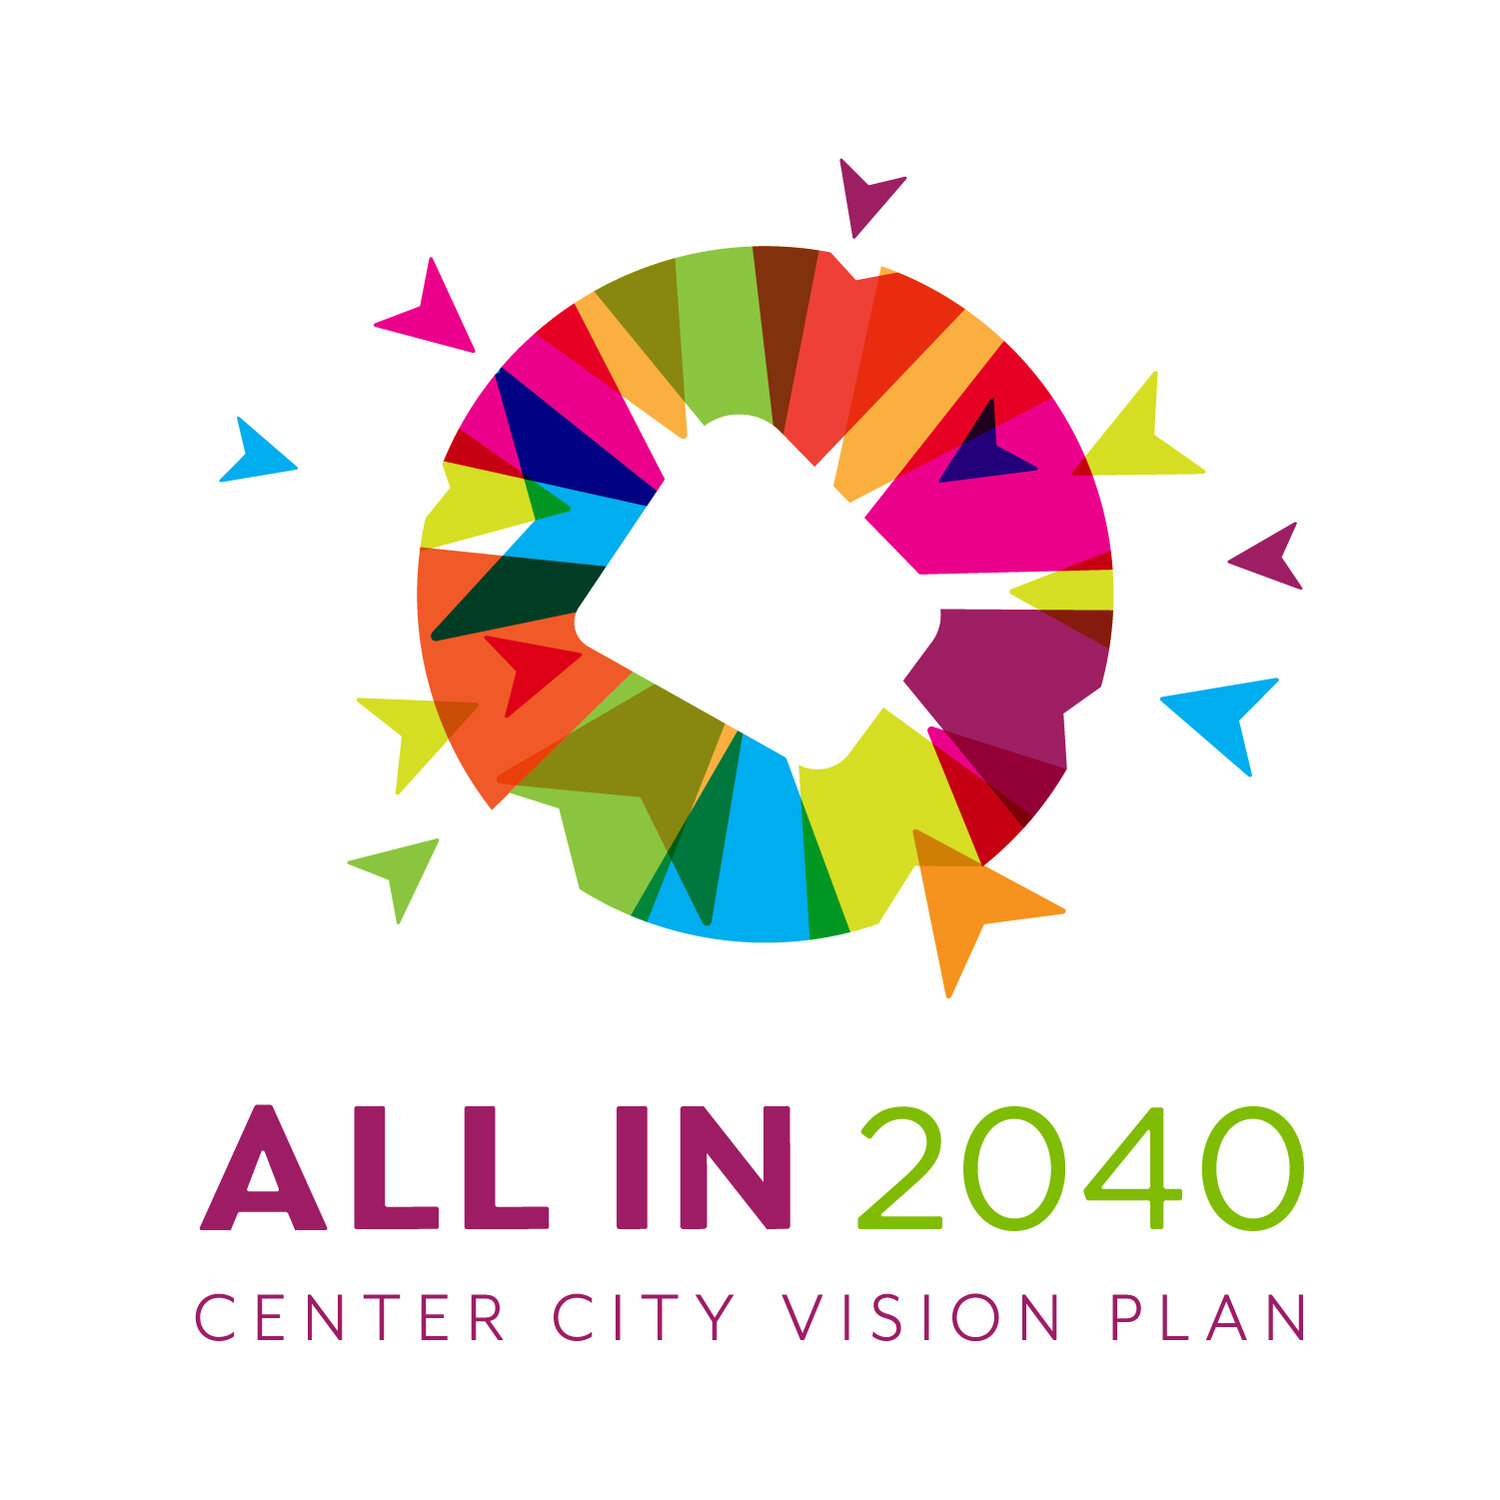 Center City 2040 Vision Plan